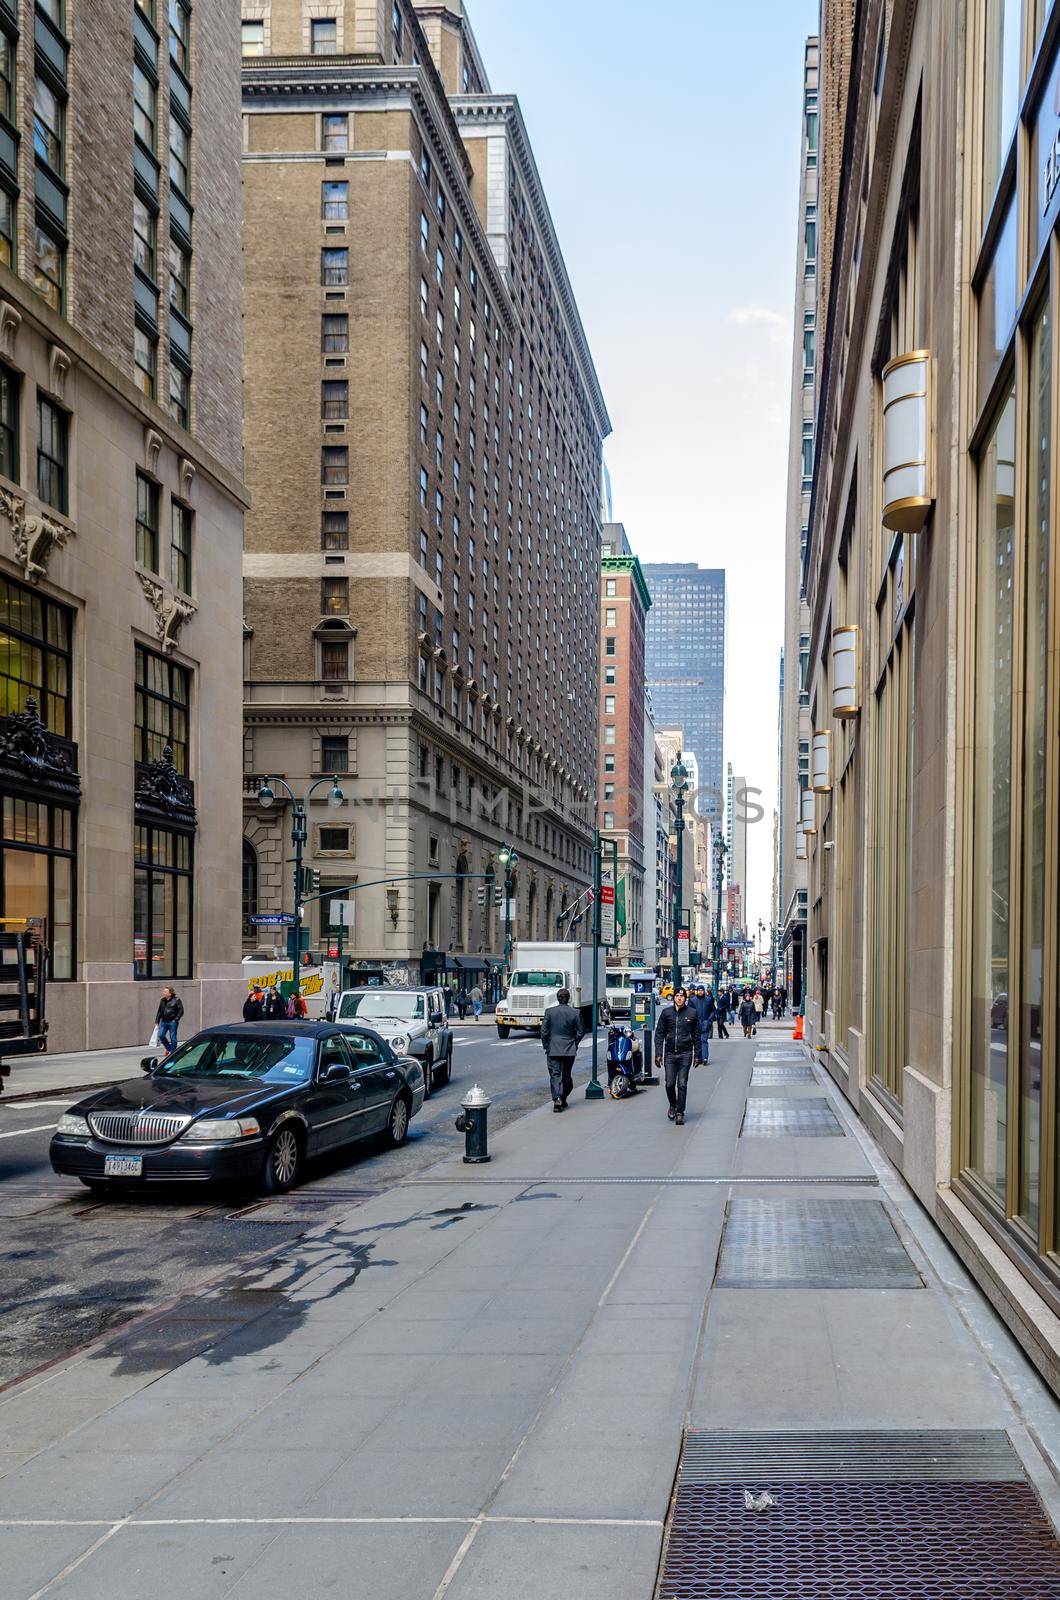 Manhattan Side Street with Cars and People walking on Sidewalk by bildgigant